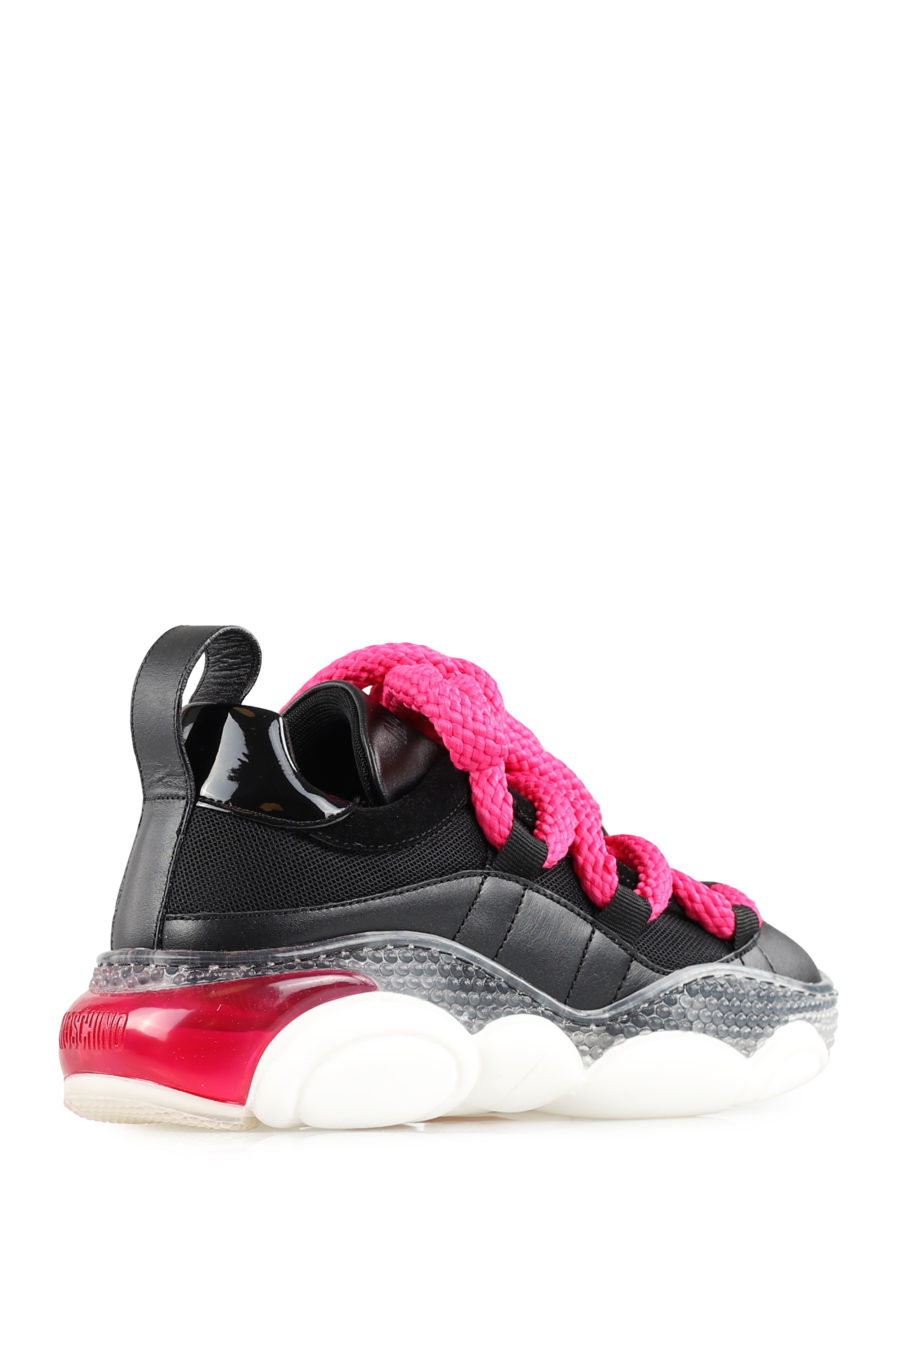 Zapatillas negras "BubbleTeddy" con maxicordones color rosa - 4fe884c824d511d3df4f973c00422a19e3e40fac